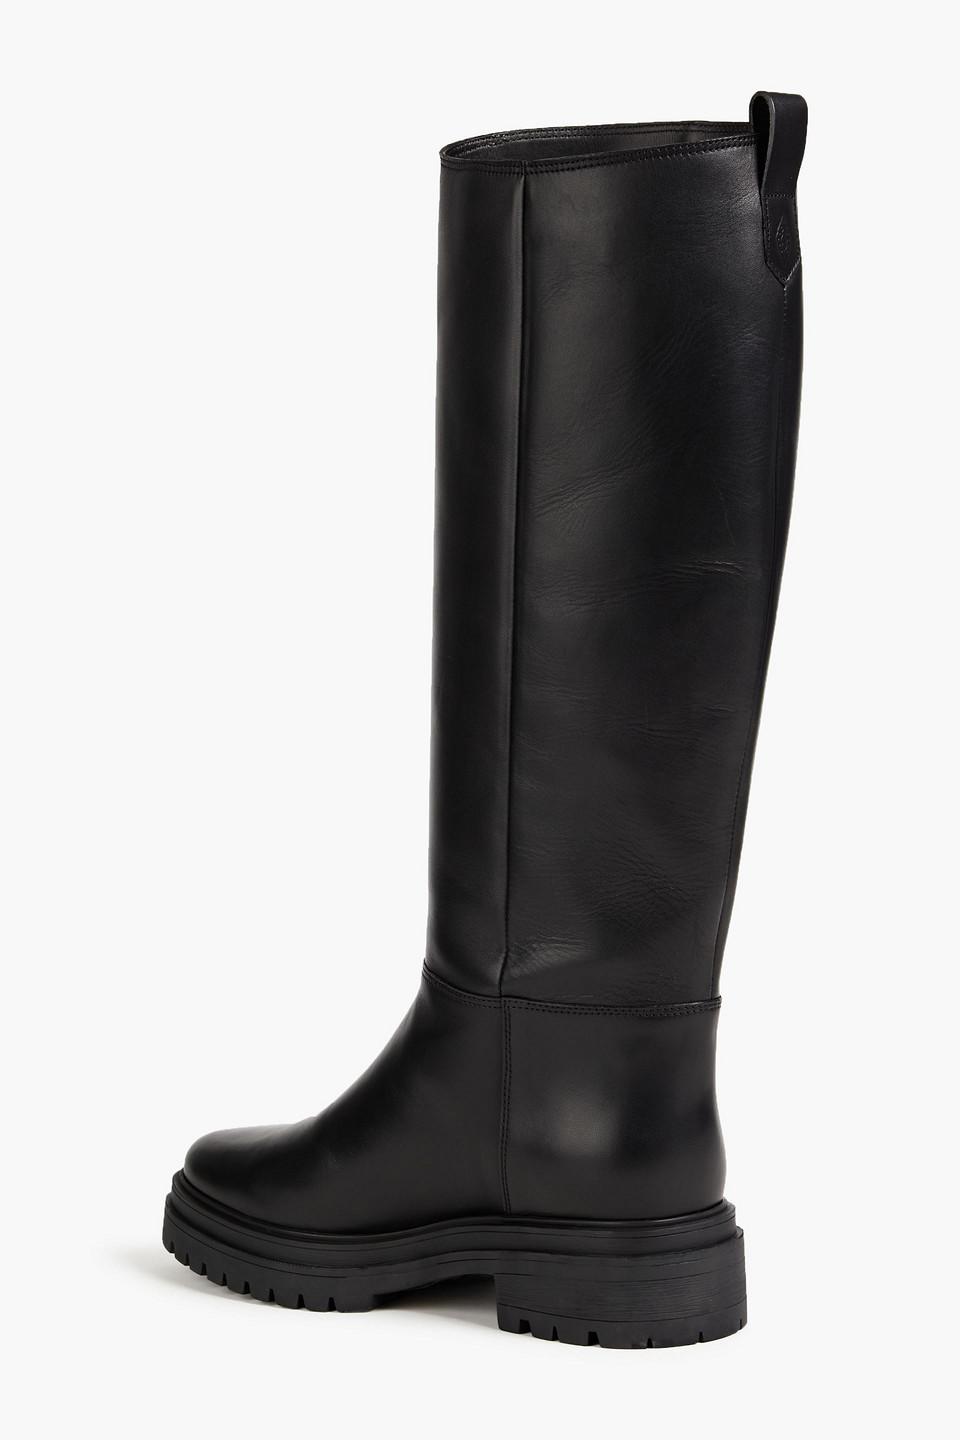 Ba&sh Crainy Leather Boots in Black | Lyst Australia